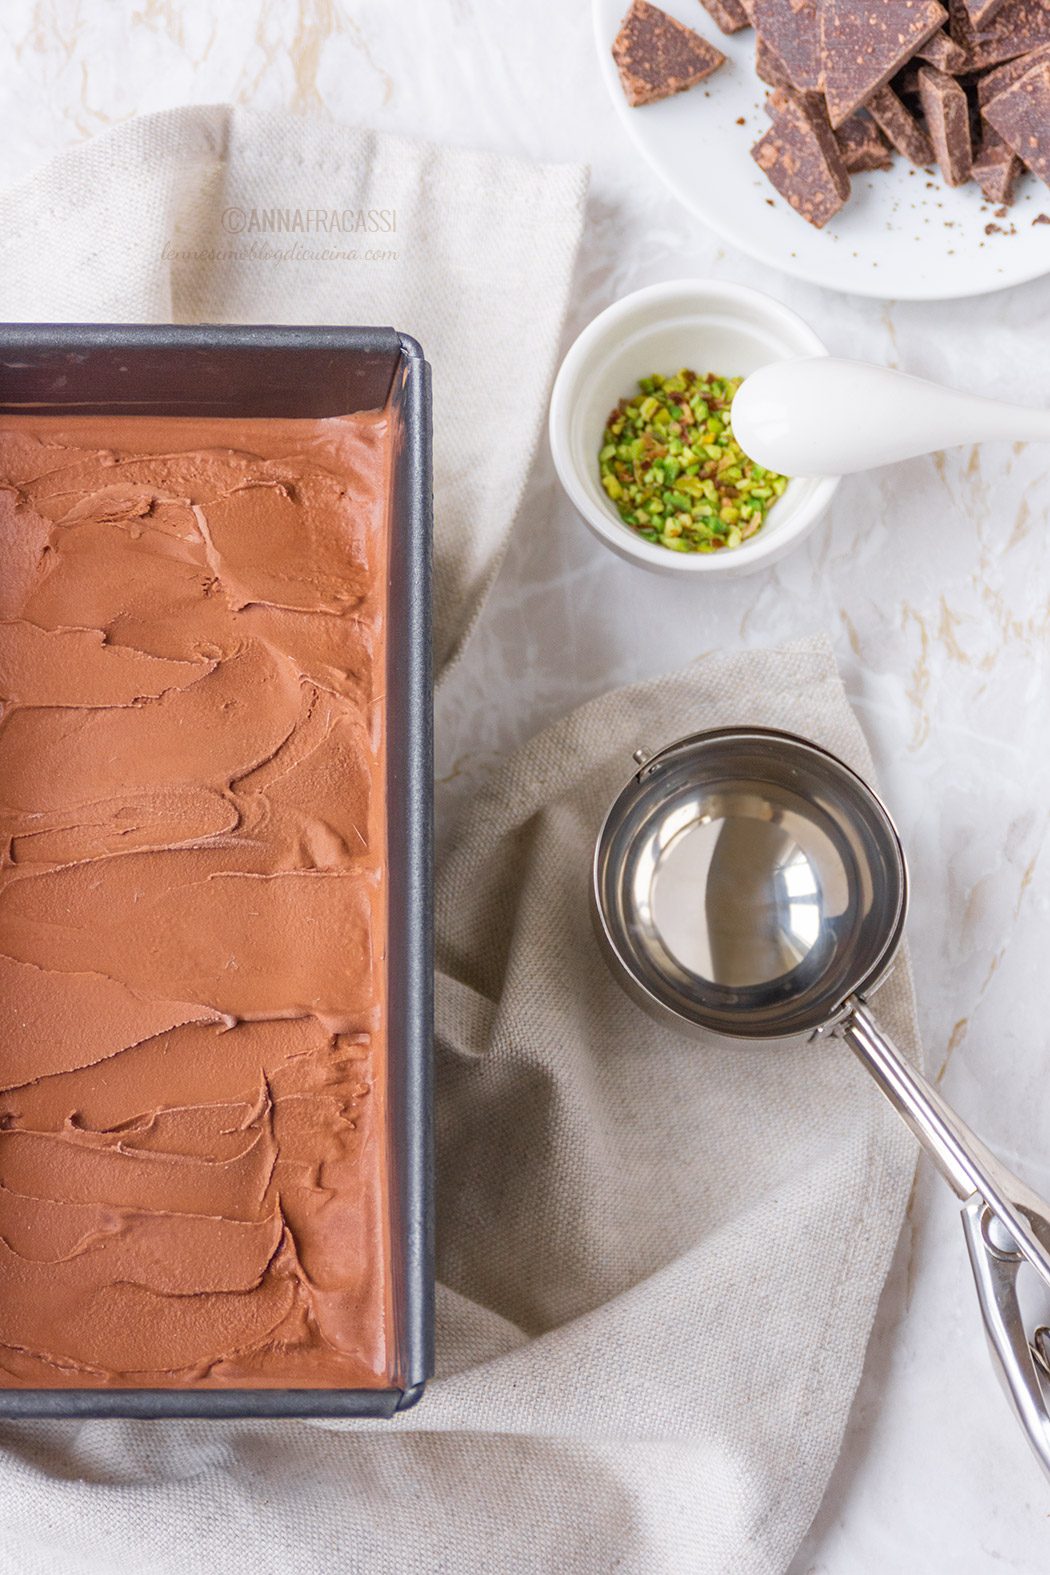 Gelato al cioccolato fondente: la ricetta senza gelatiera